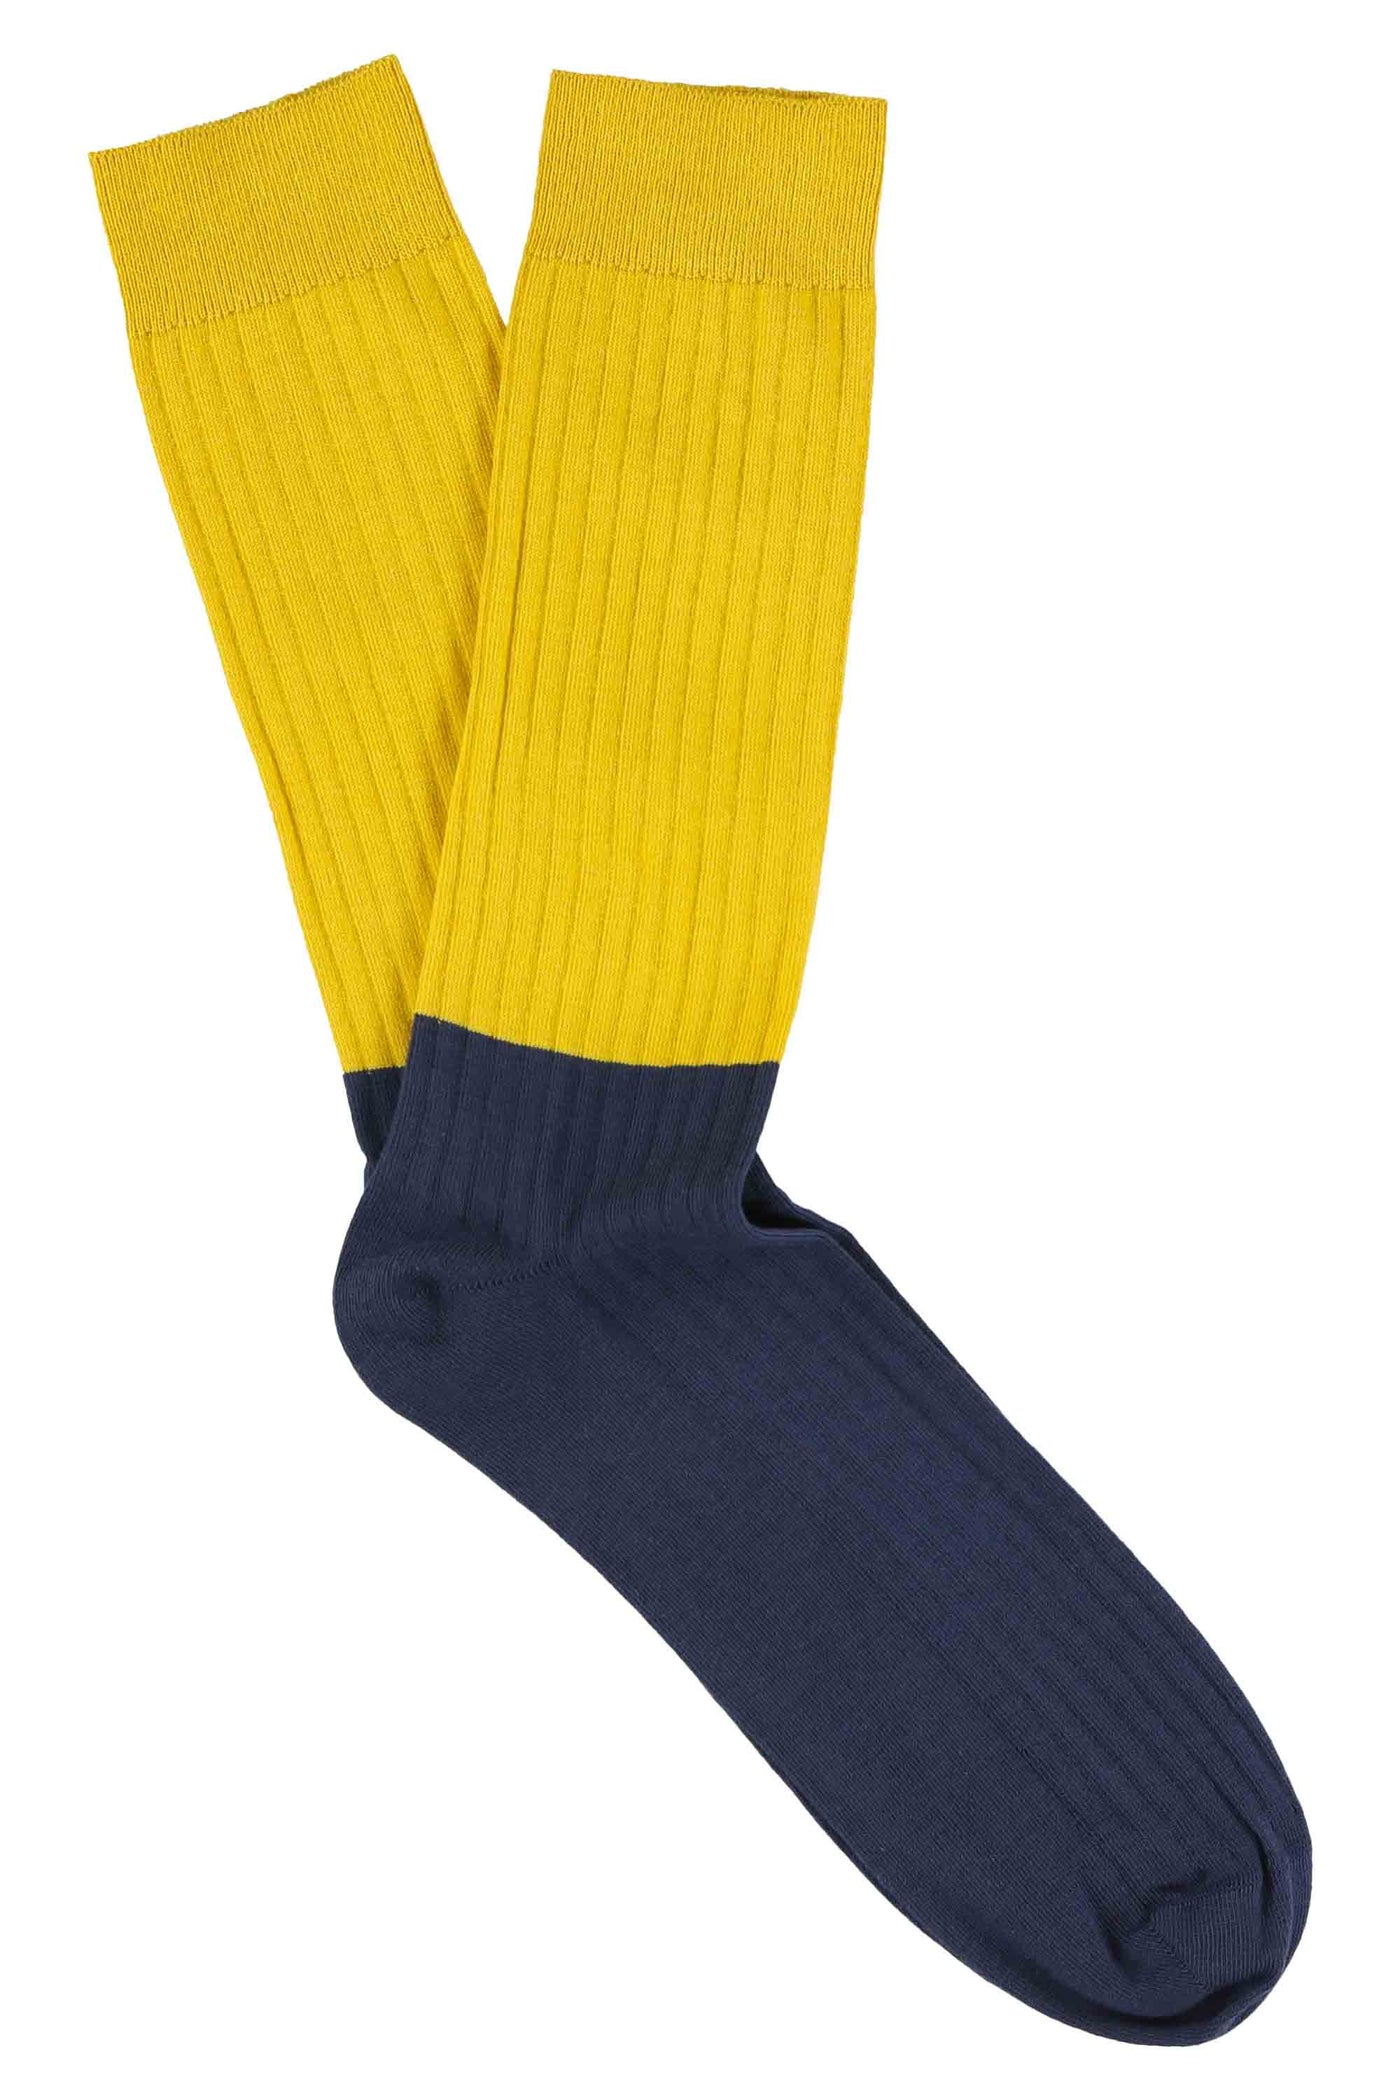 Escuyer Socks -  Colour Block - Inca Gold / Insigna Blue